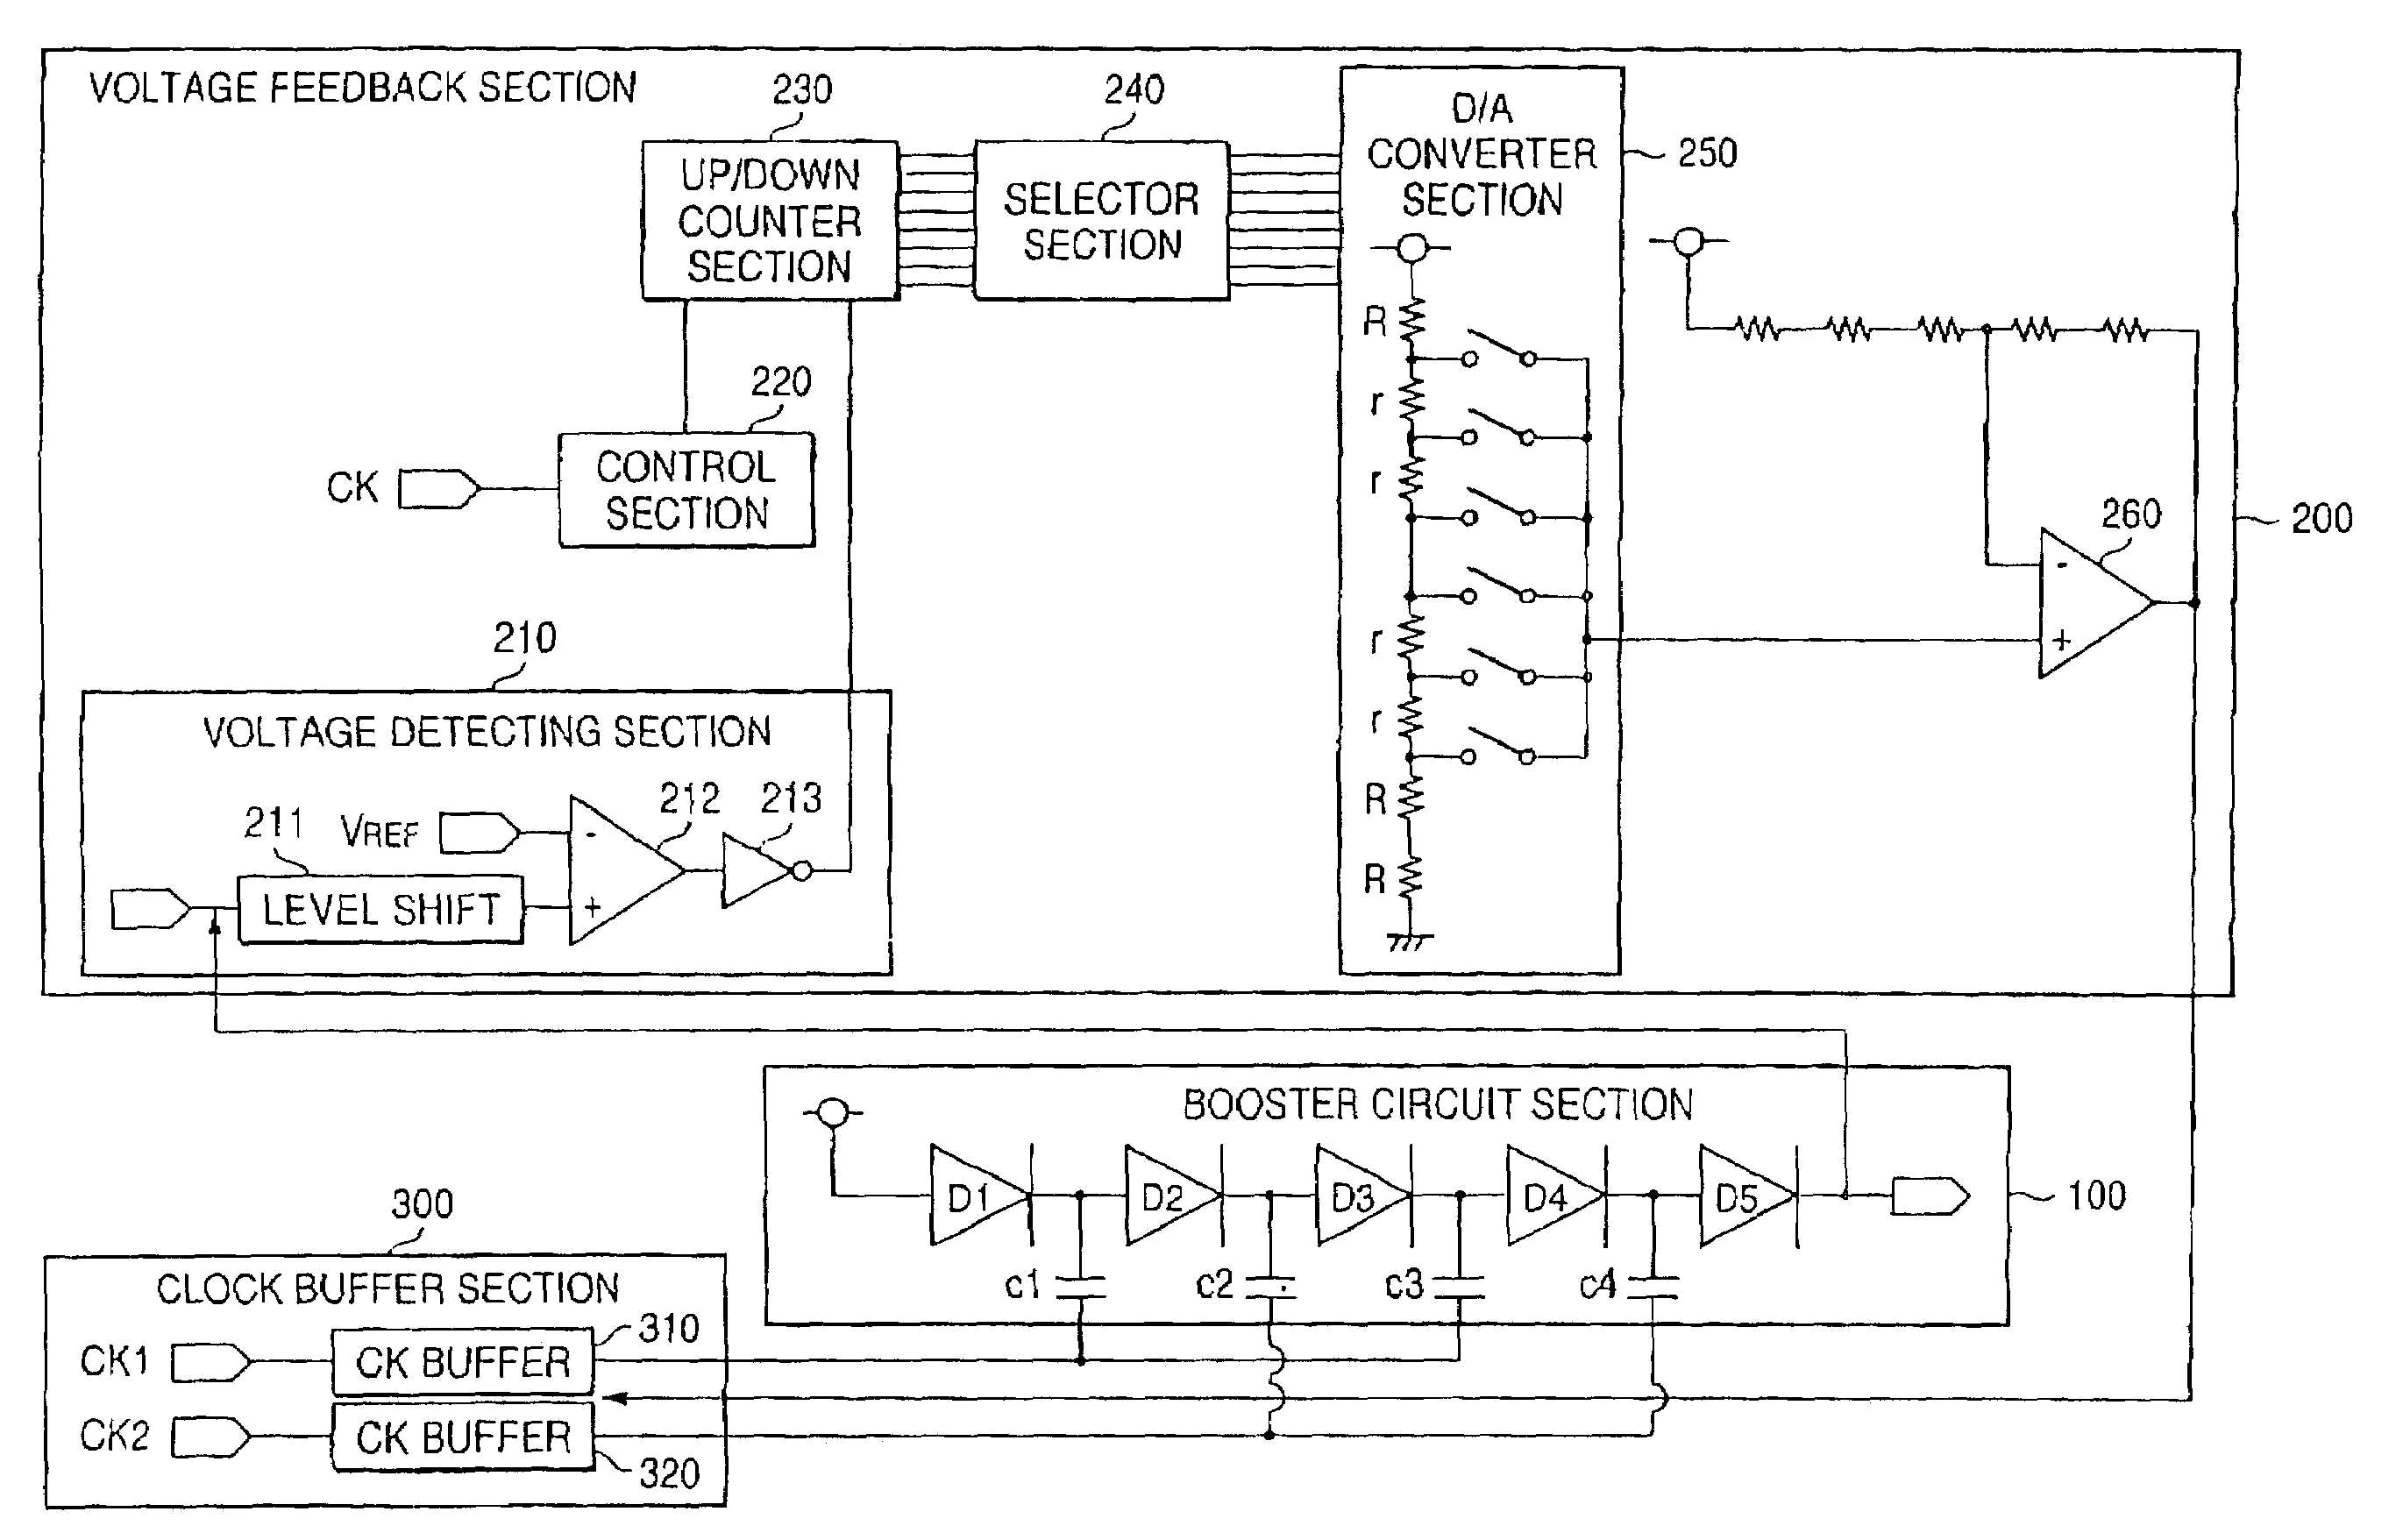 Voltage-change control circuit and method